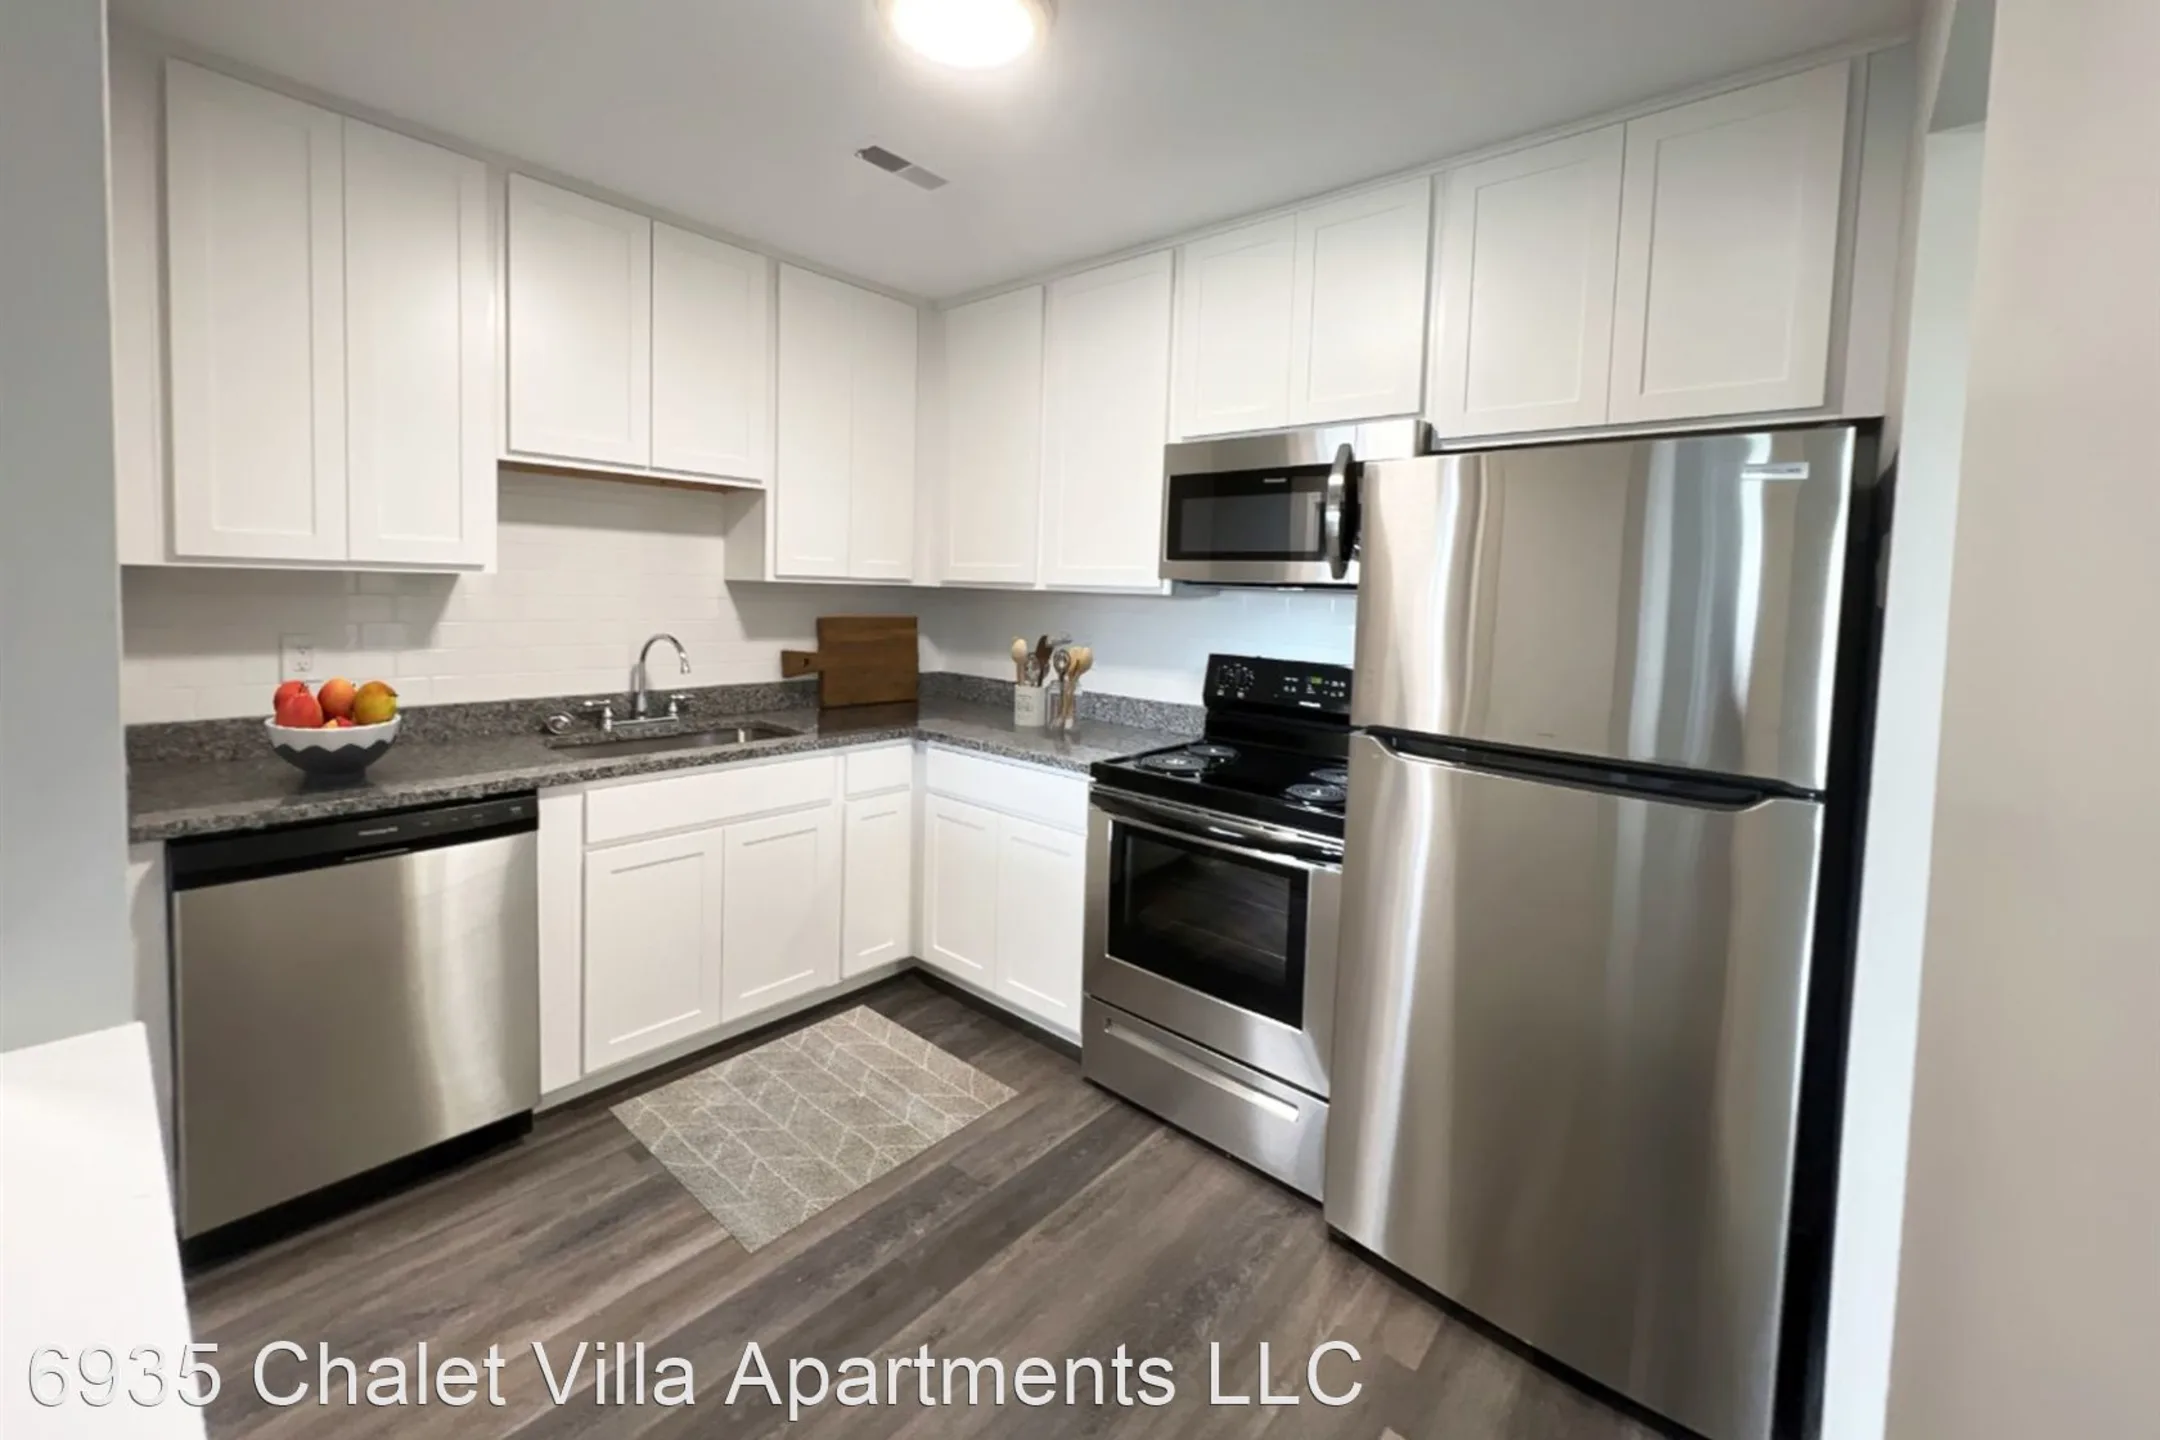 Kitchen - Chalet Villa Apartments - Clarkston, MI